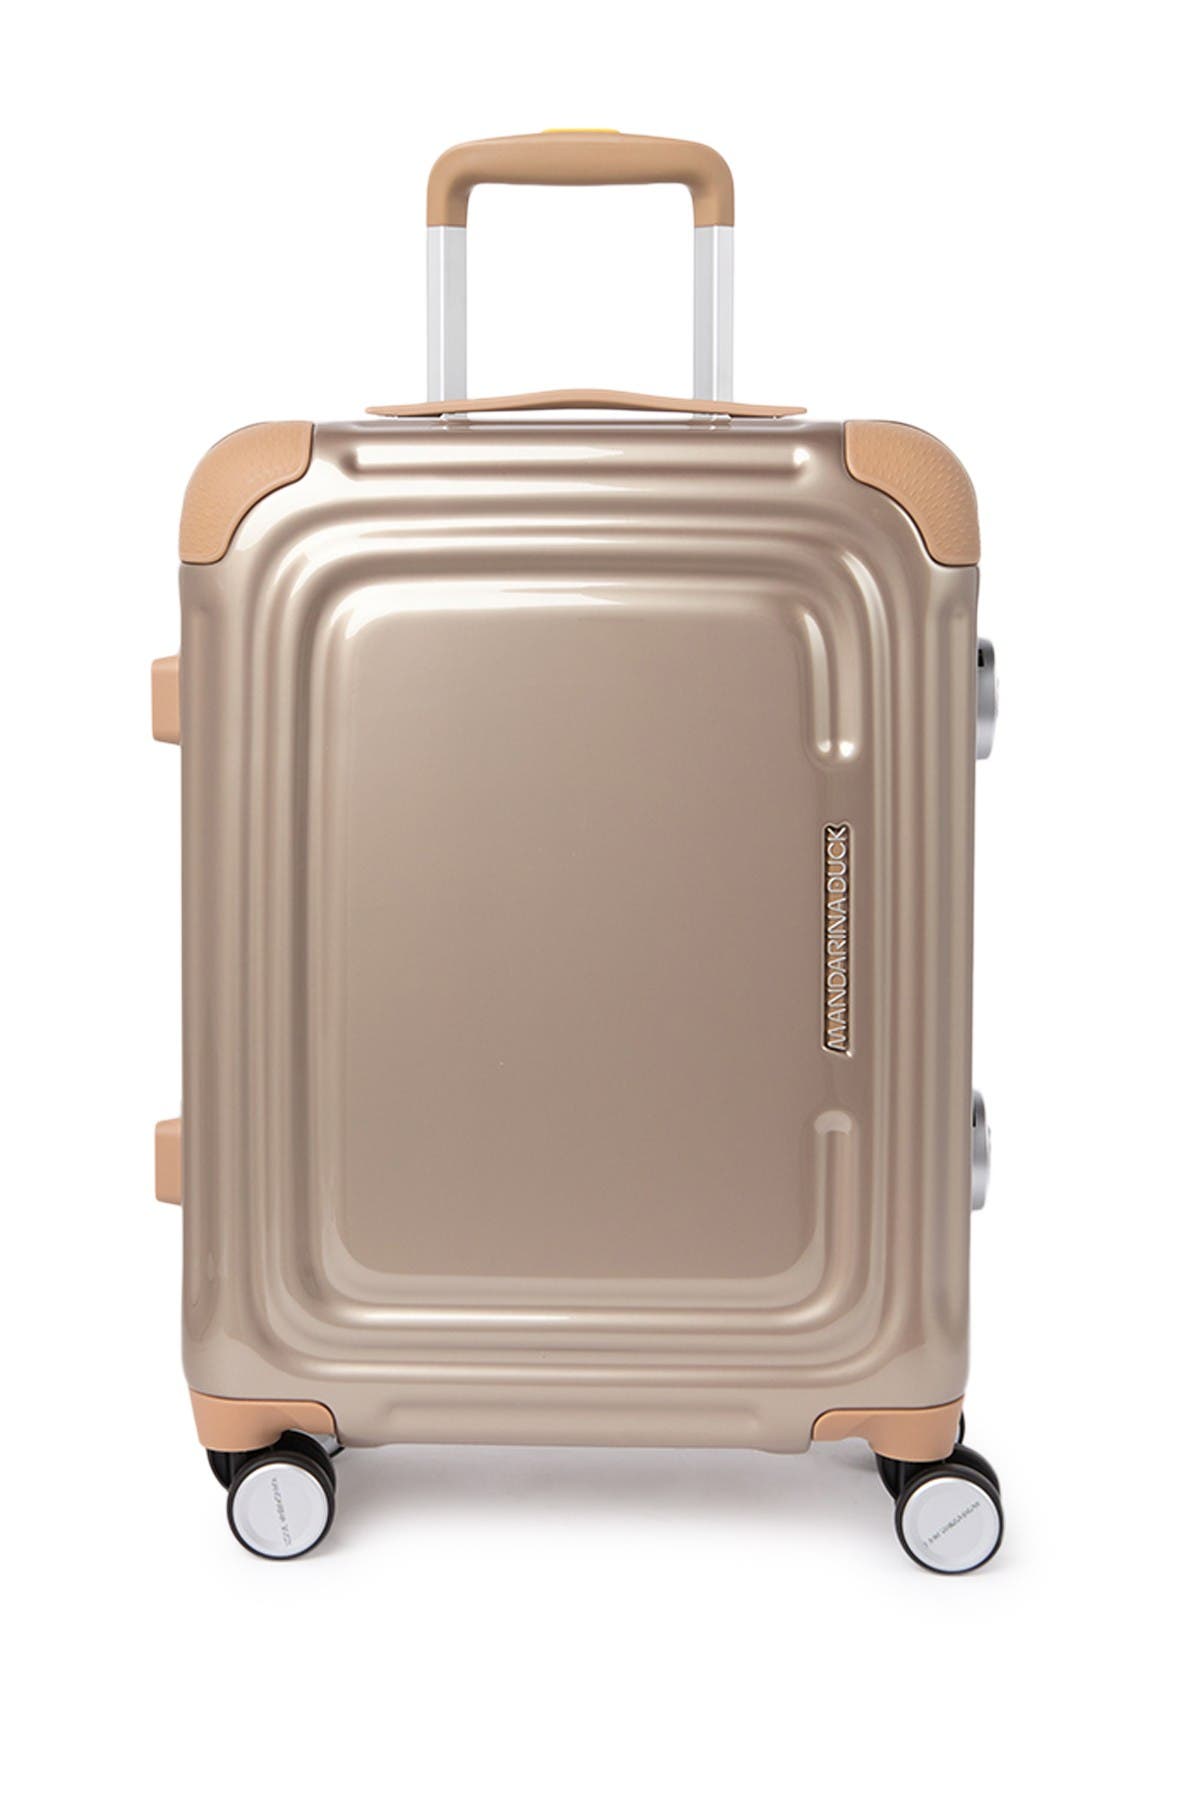 Mandarina Duck C-frame Cabin Low Trolley Hardshell Luggage In Dark Grey5